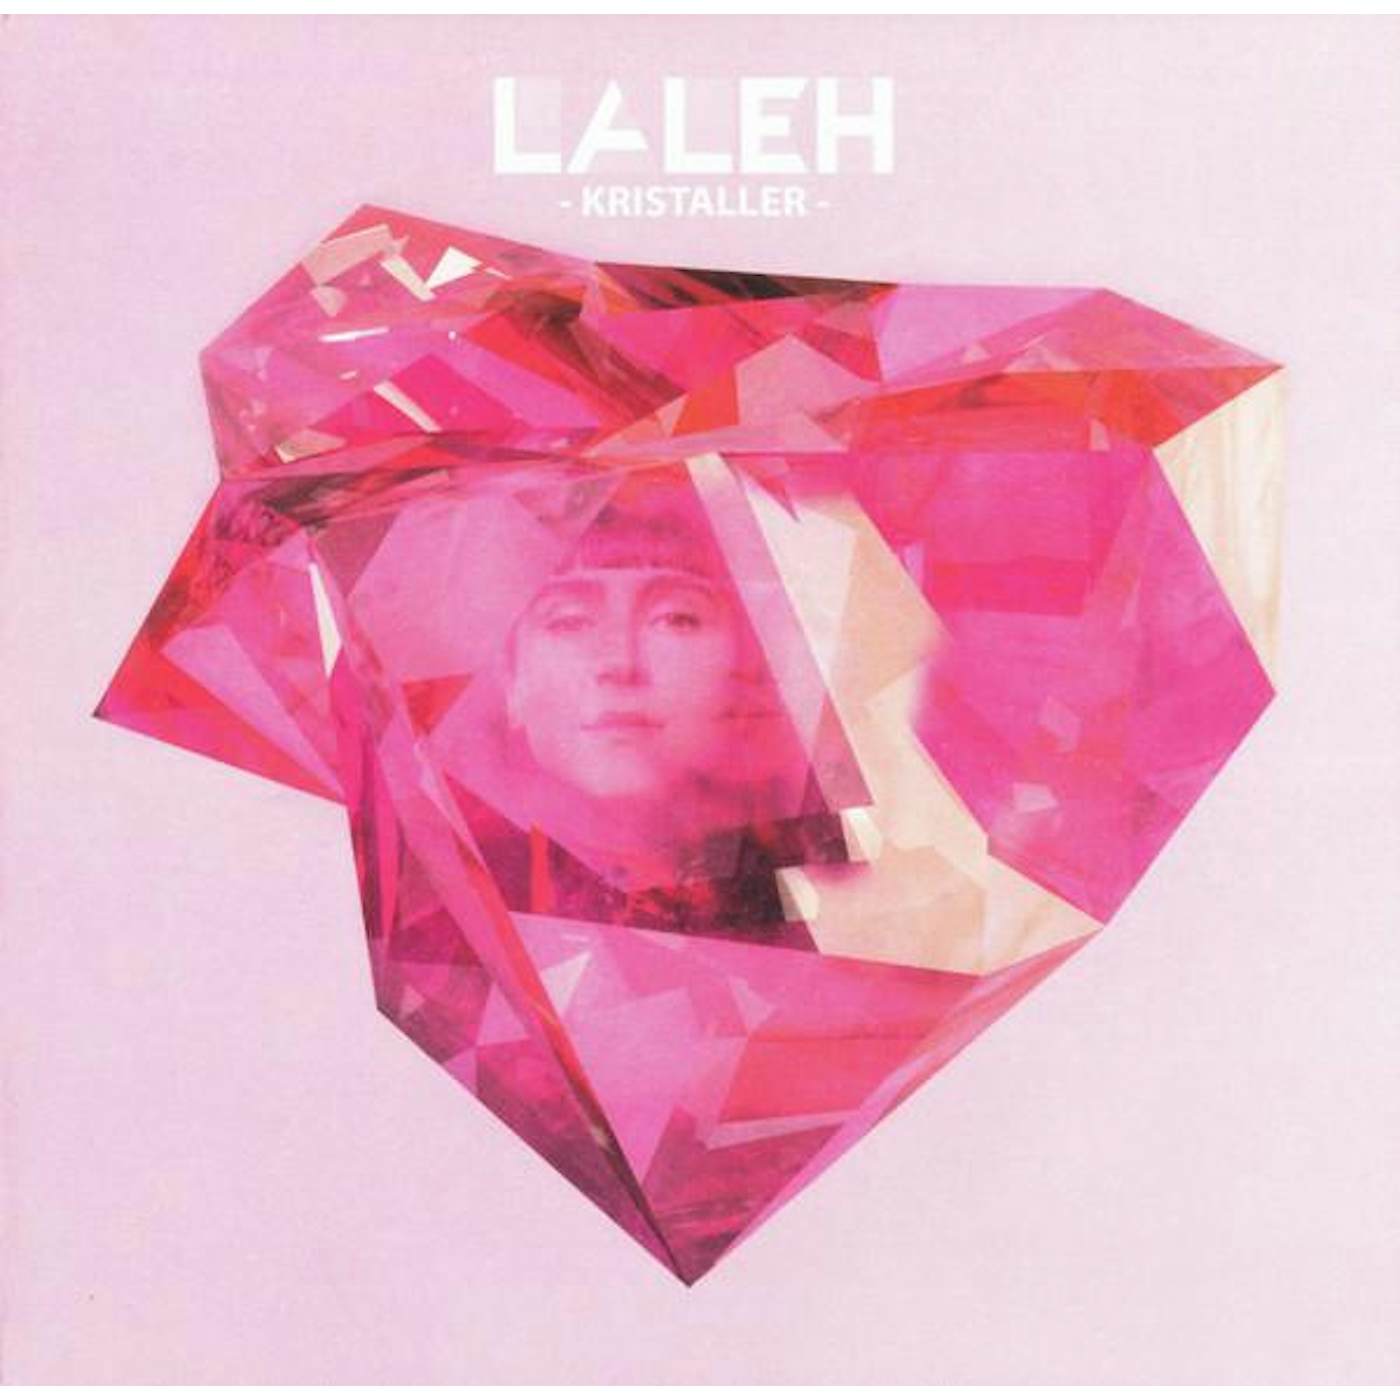 Laleh Kristaller Vinyl Record